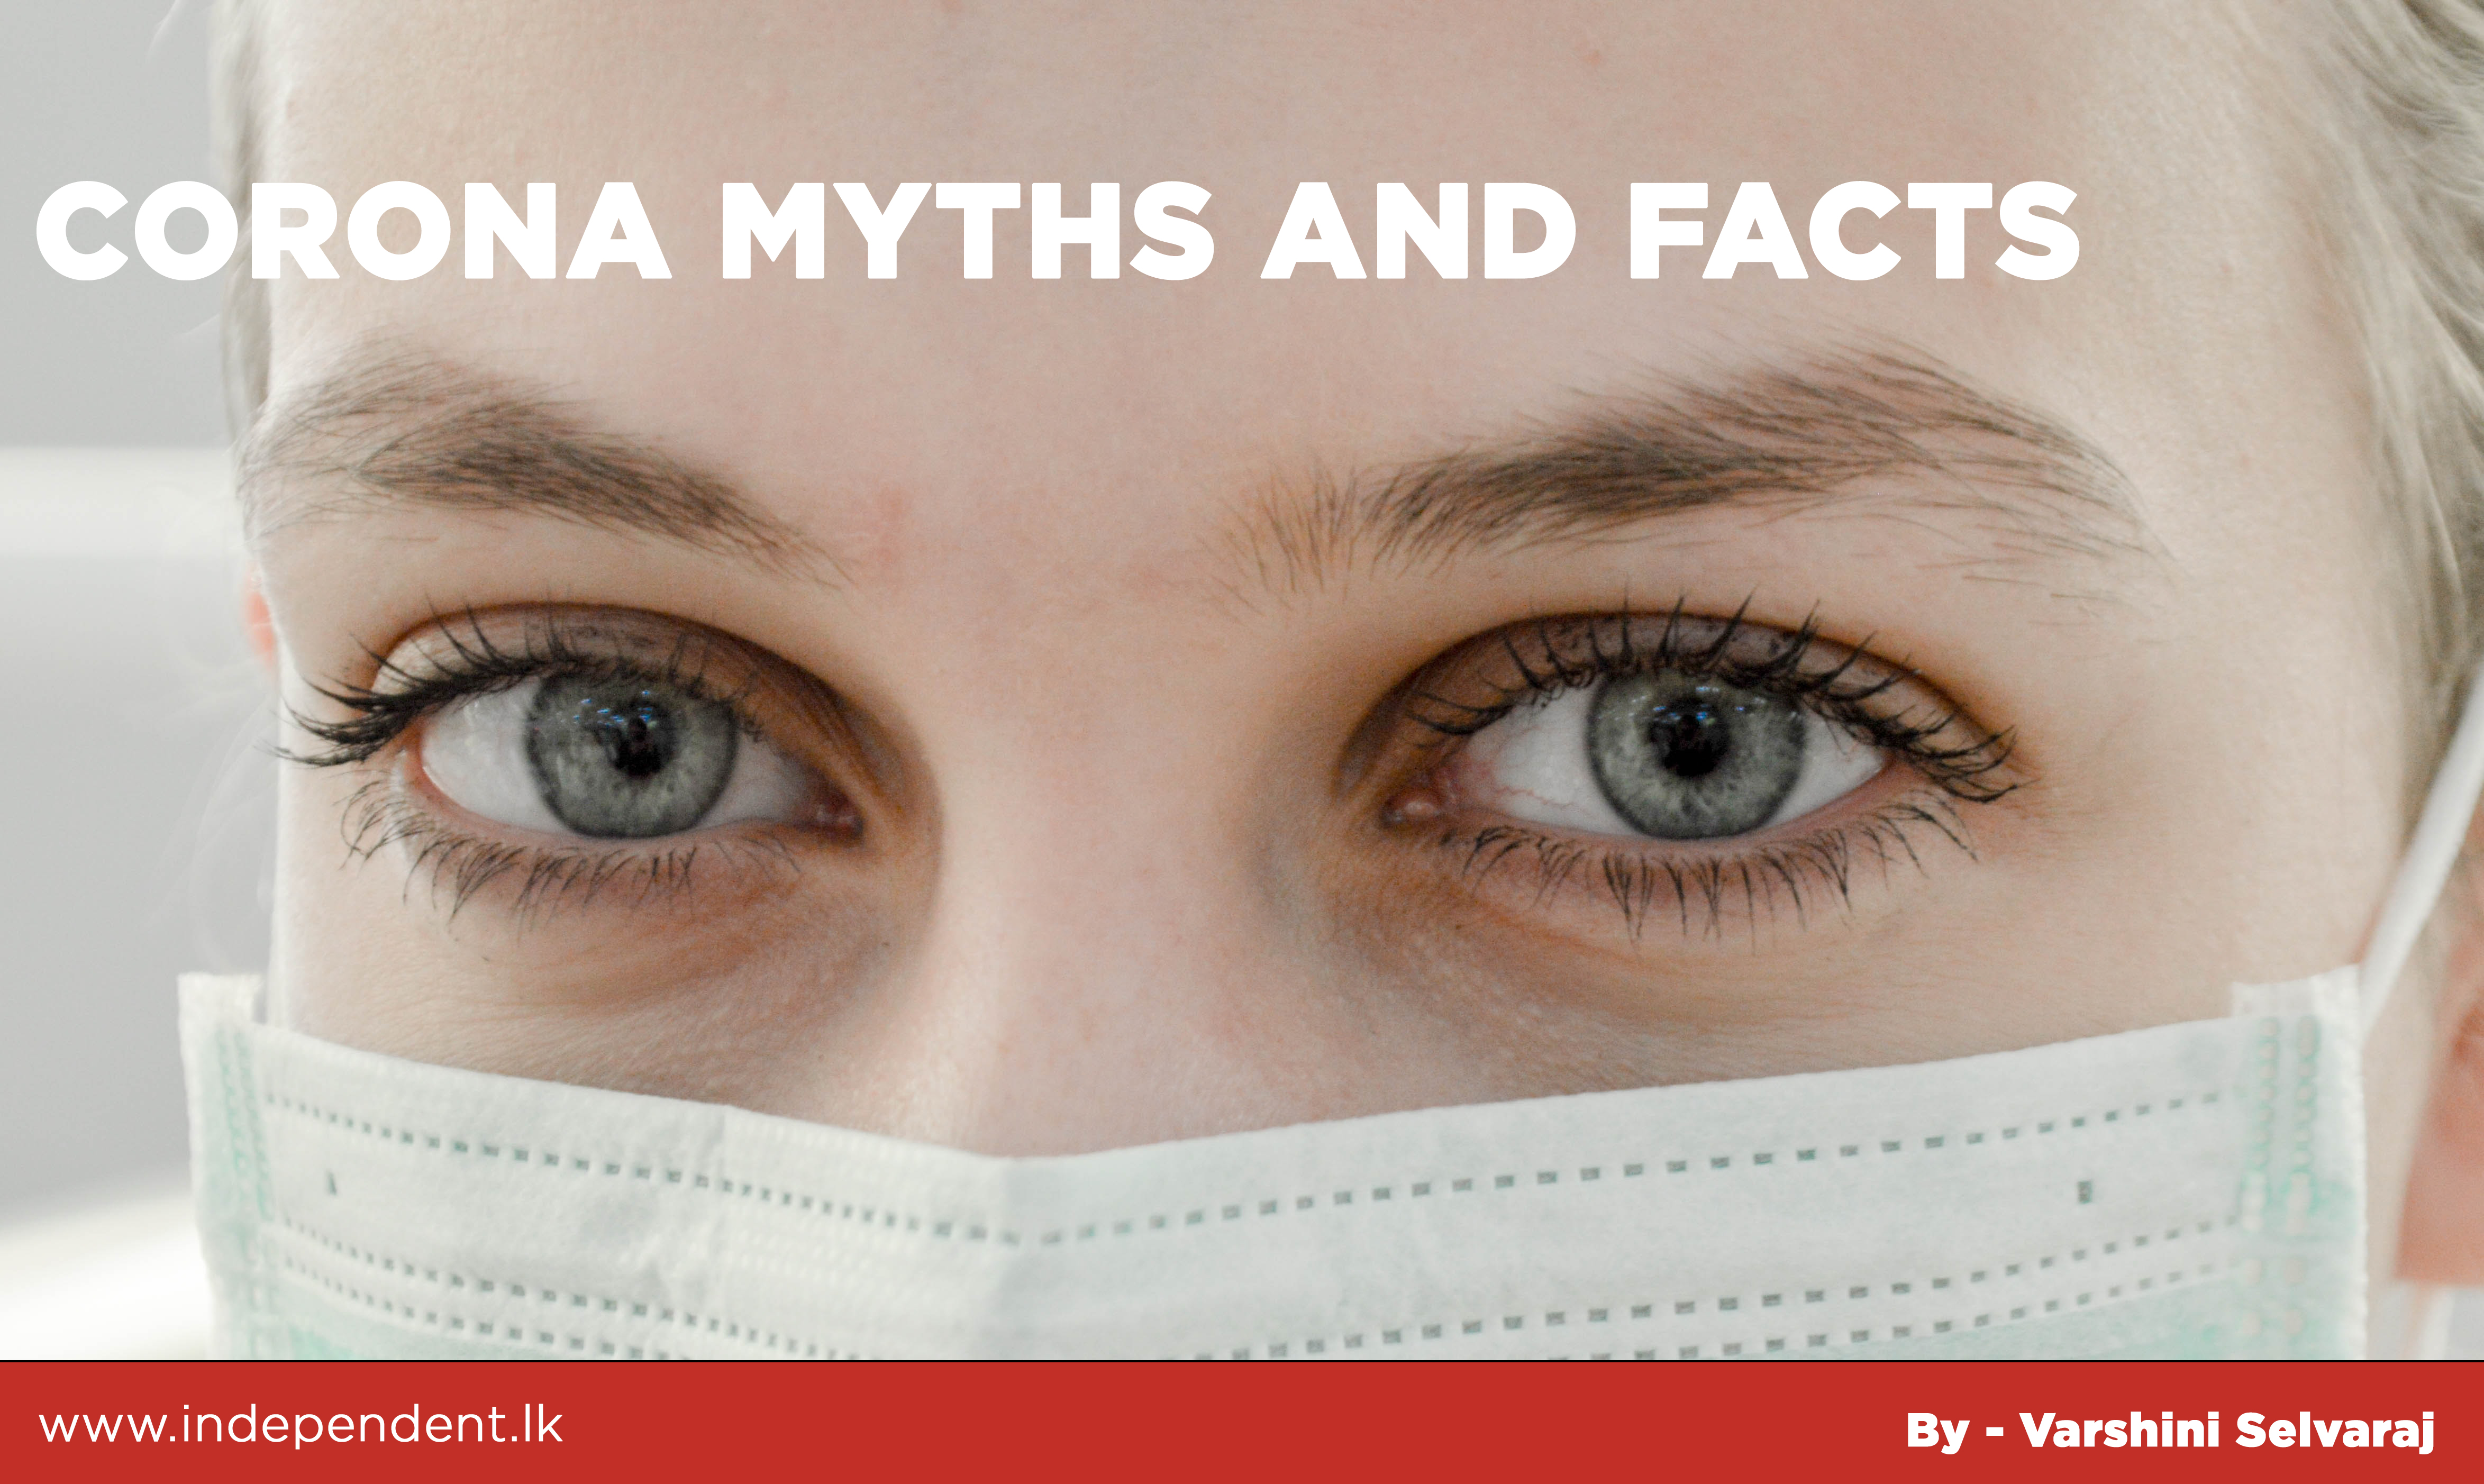 Corona myths and facts